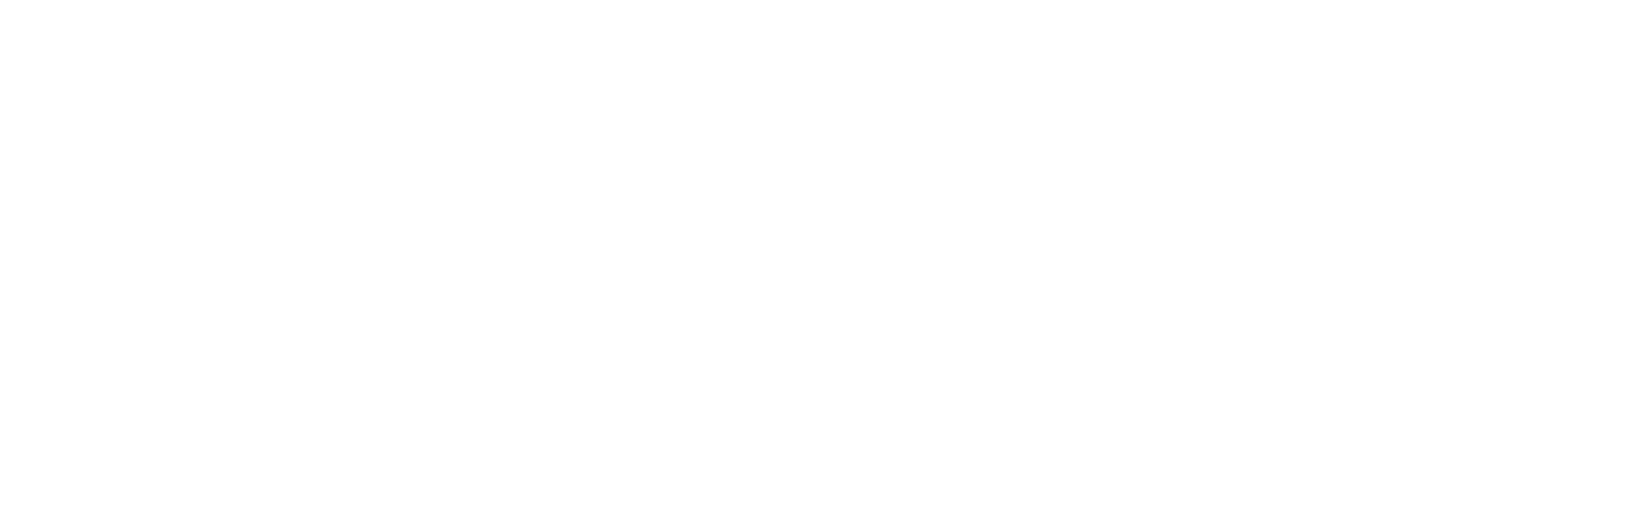 Tasman Business and Tourism Association Logo